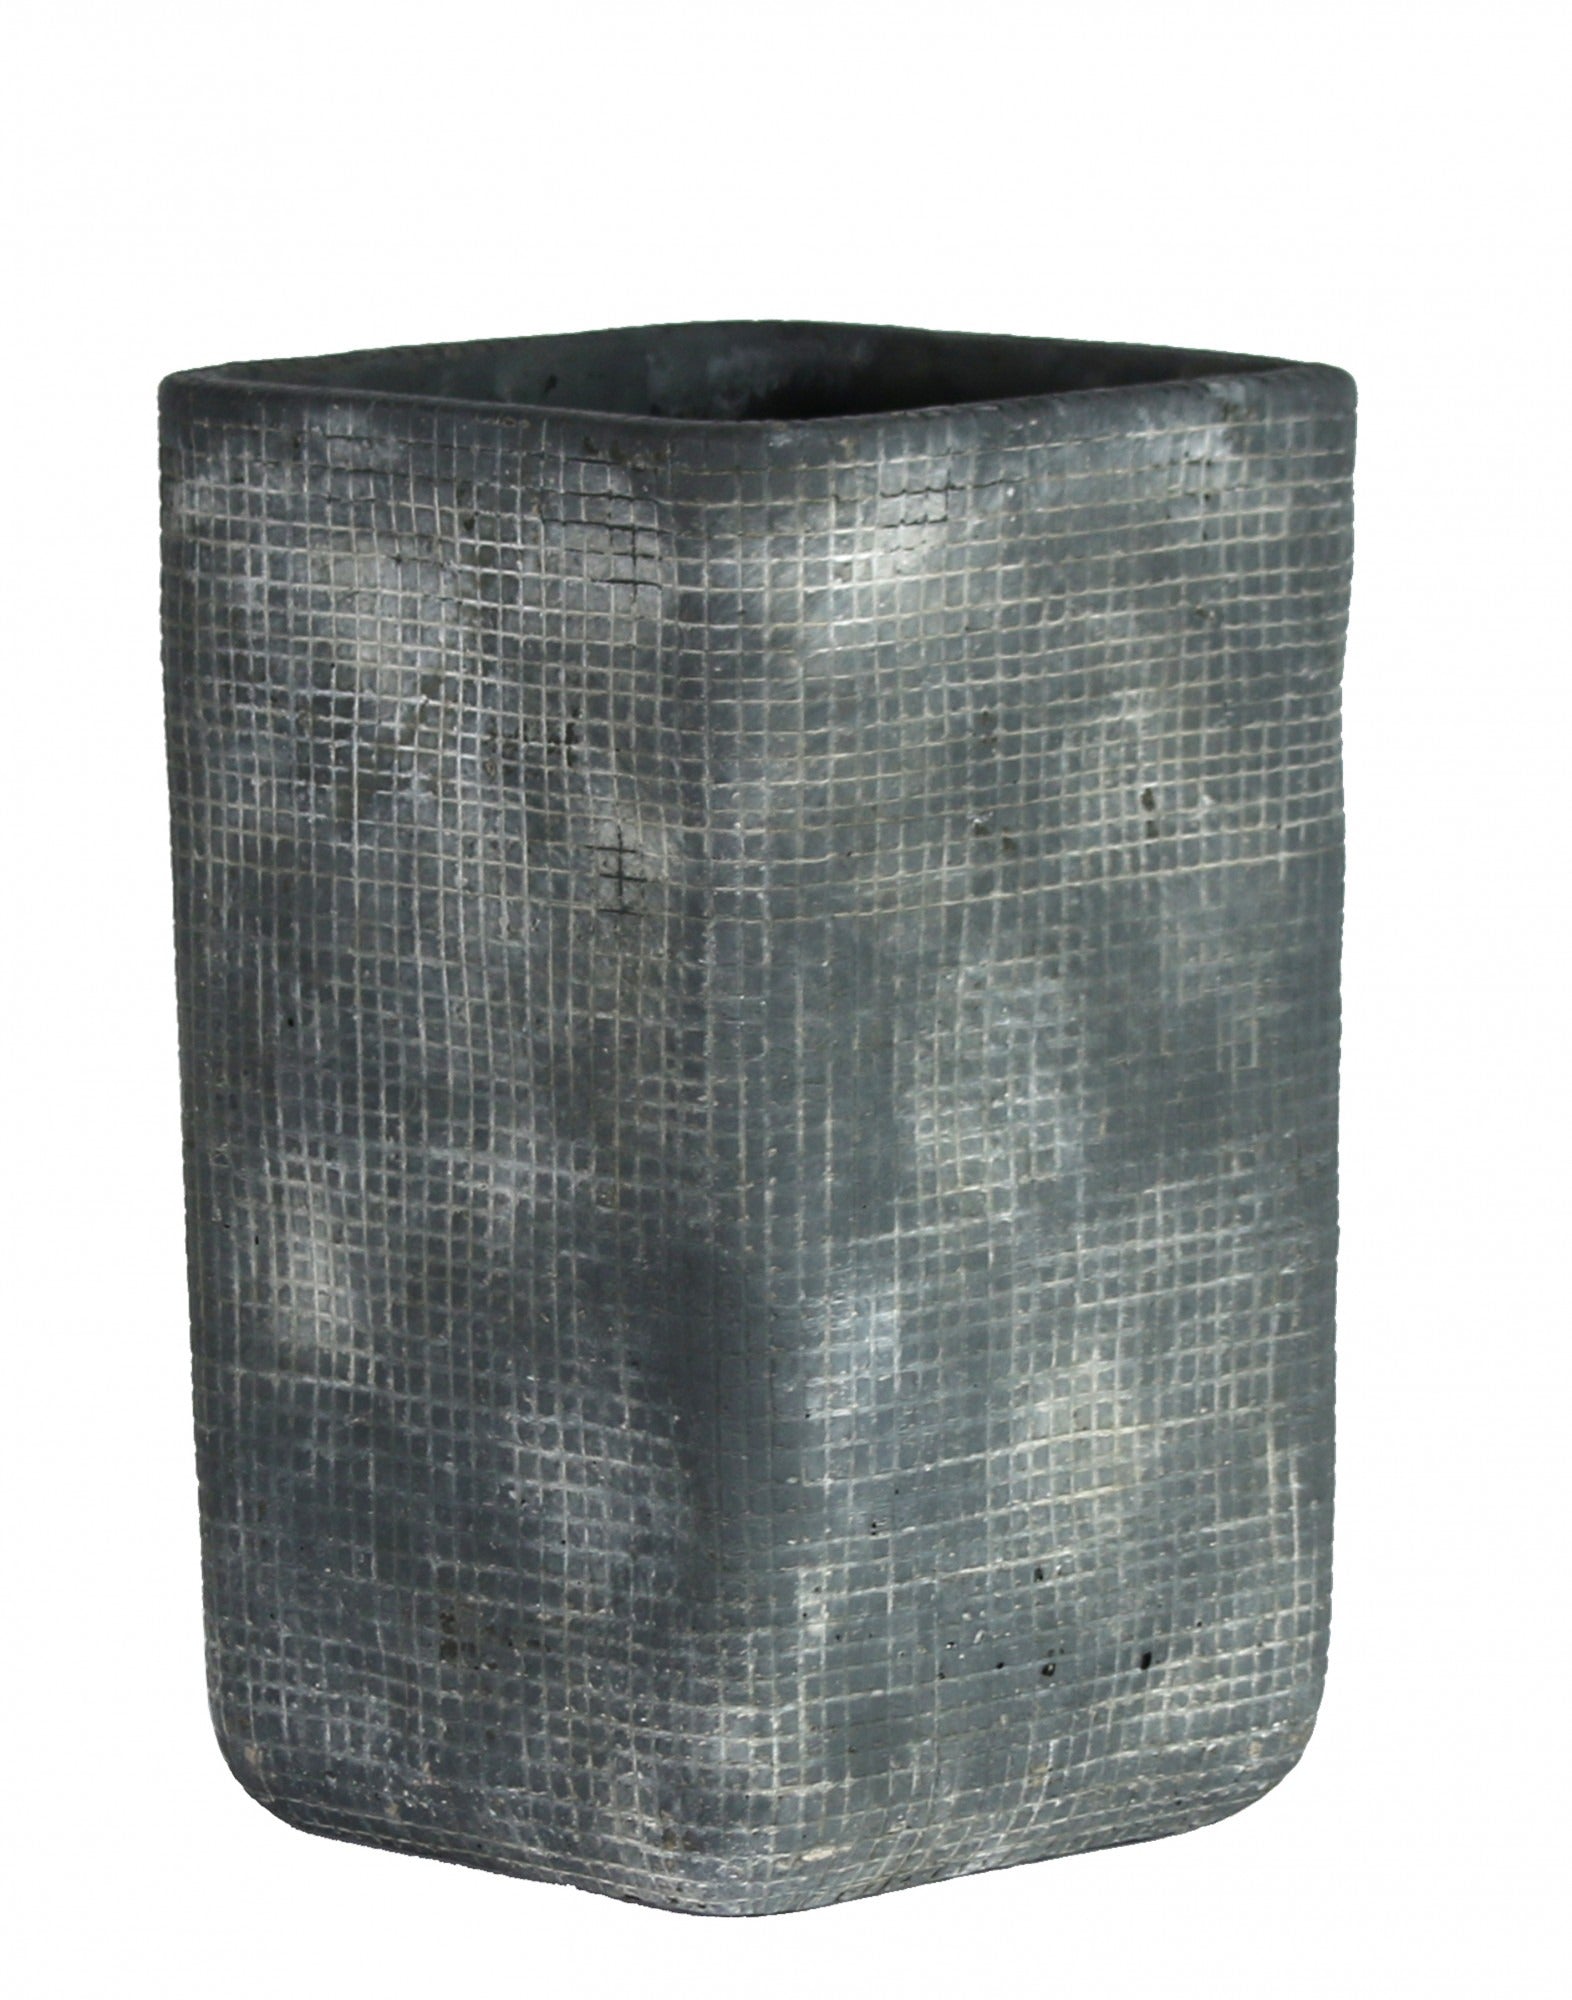 View Grey Zen Ceramic Vase 22cm information